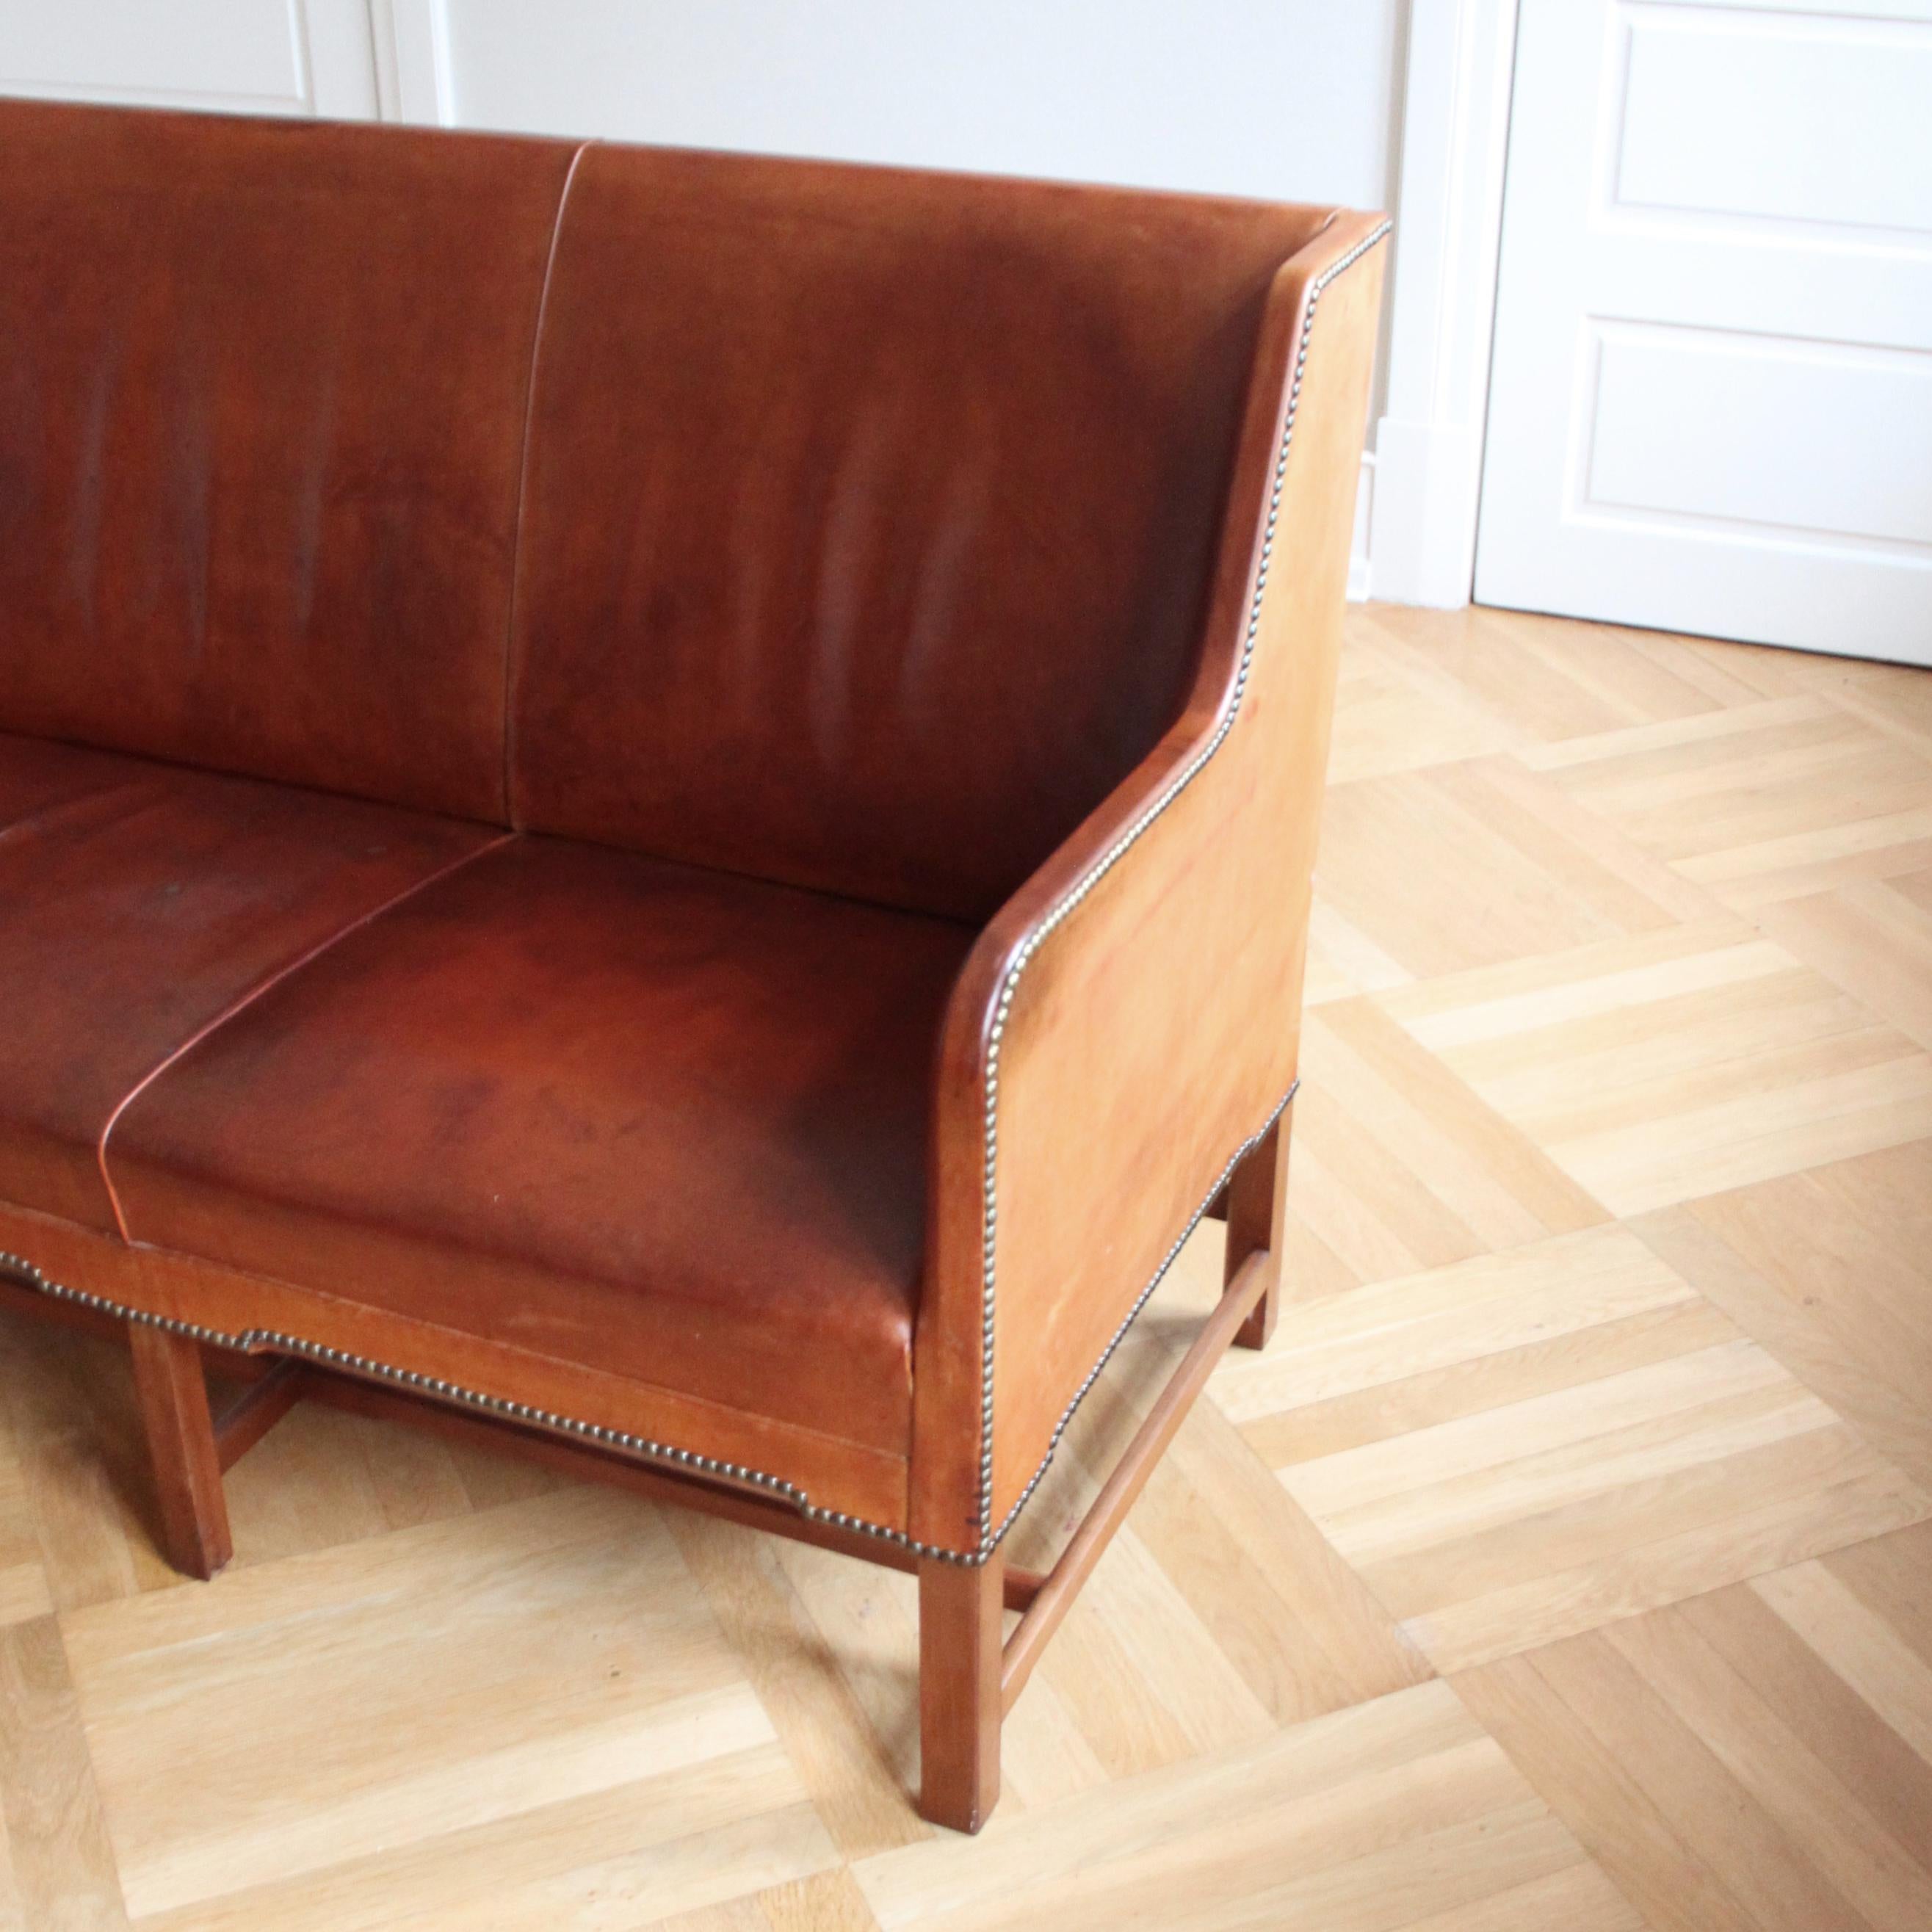 Danish Kaare Klint Sofa Model 5011 Original Niger Leather 1930s, Scandinavian Modern For Sale